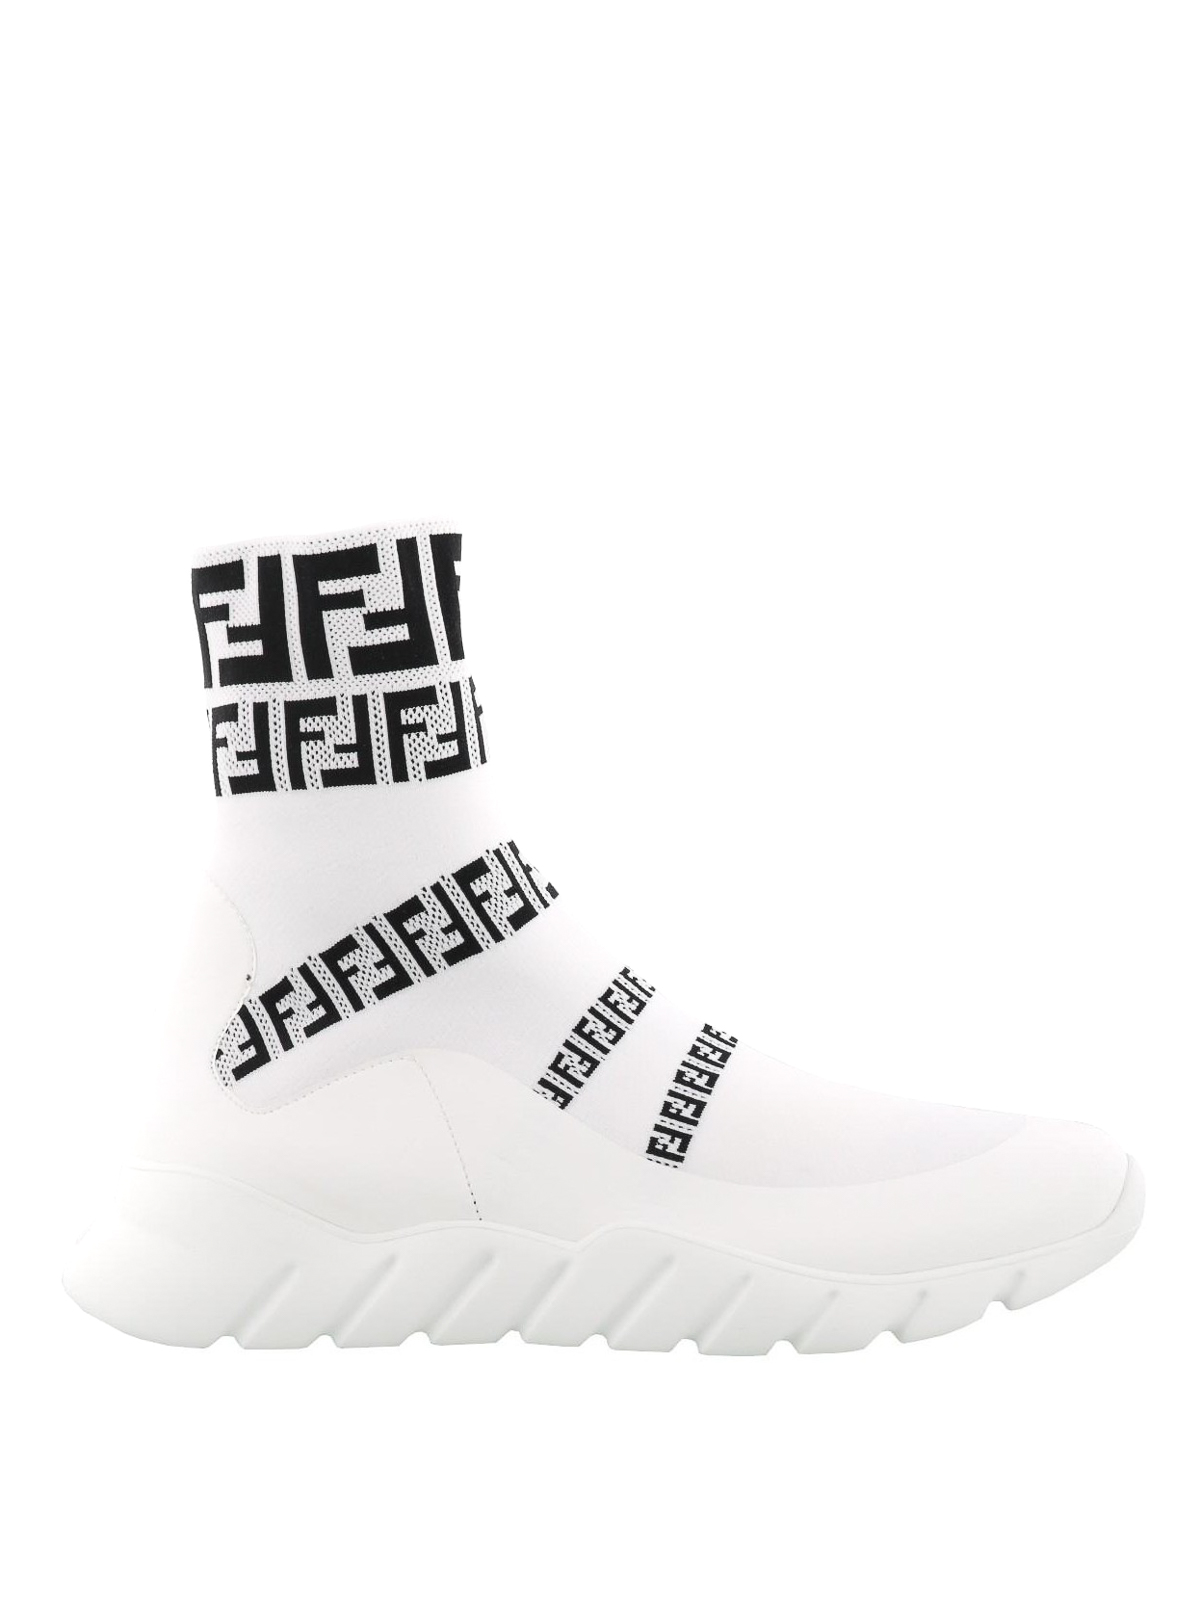 ff sock sneakers